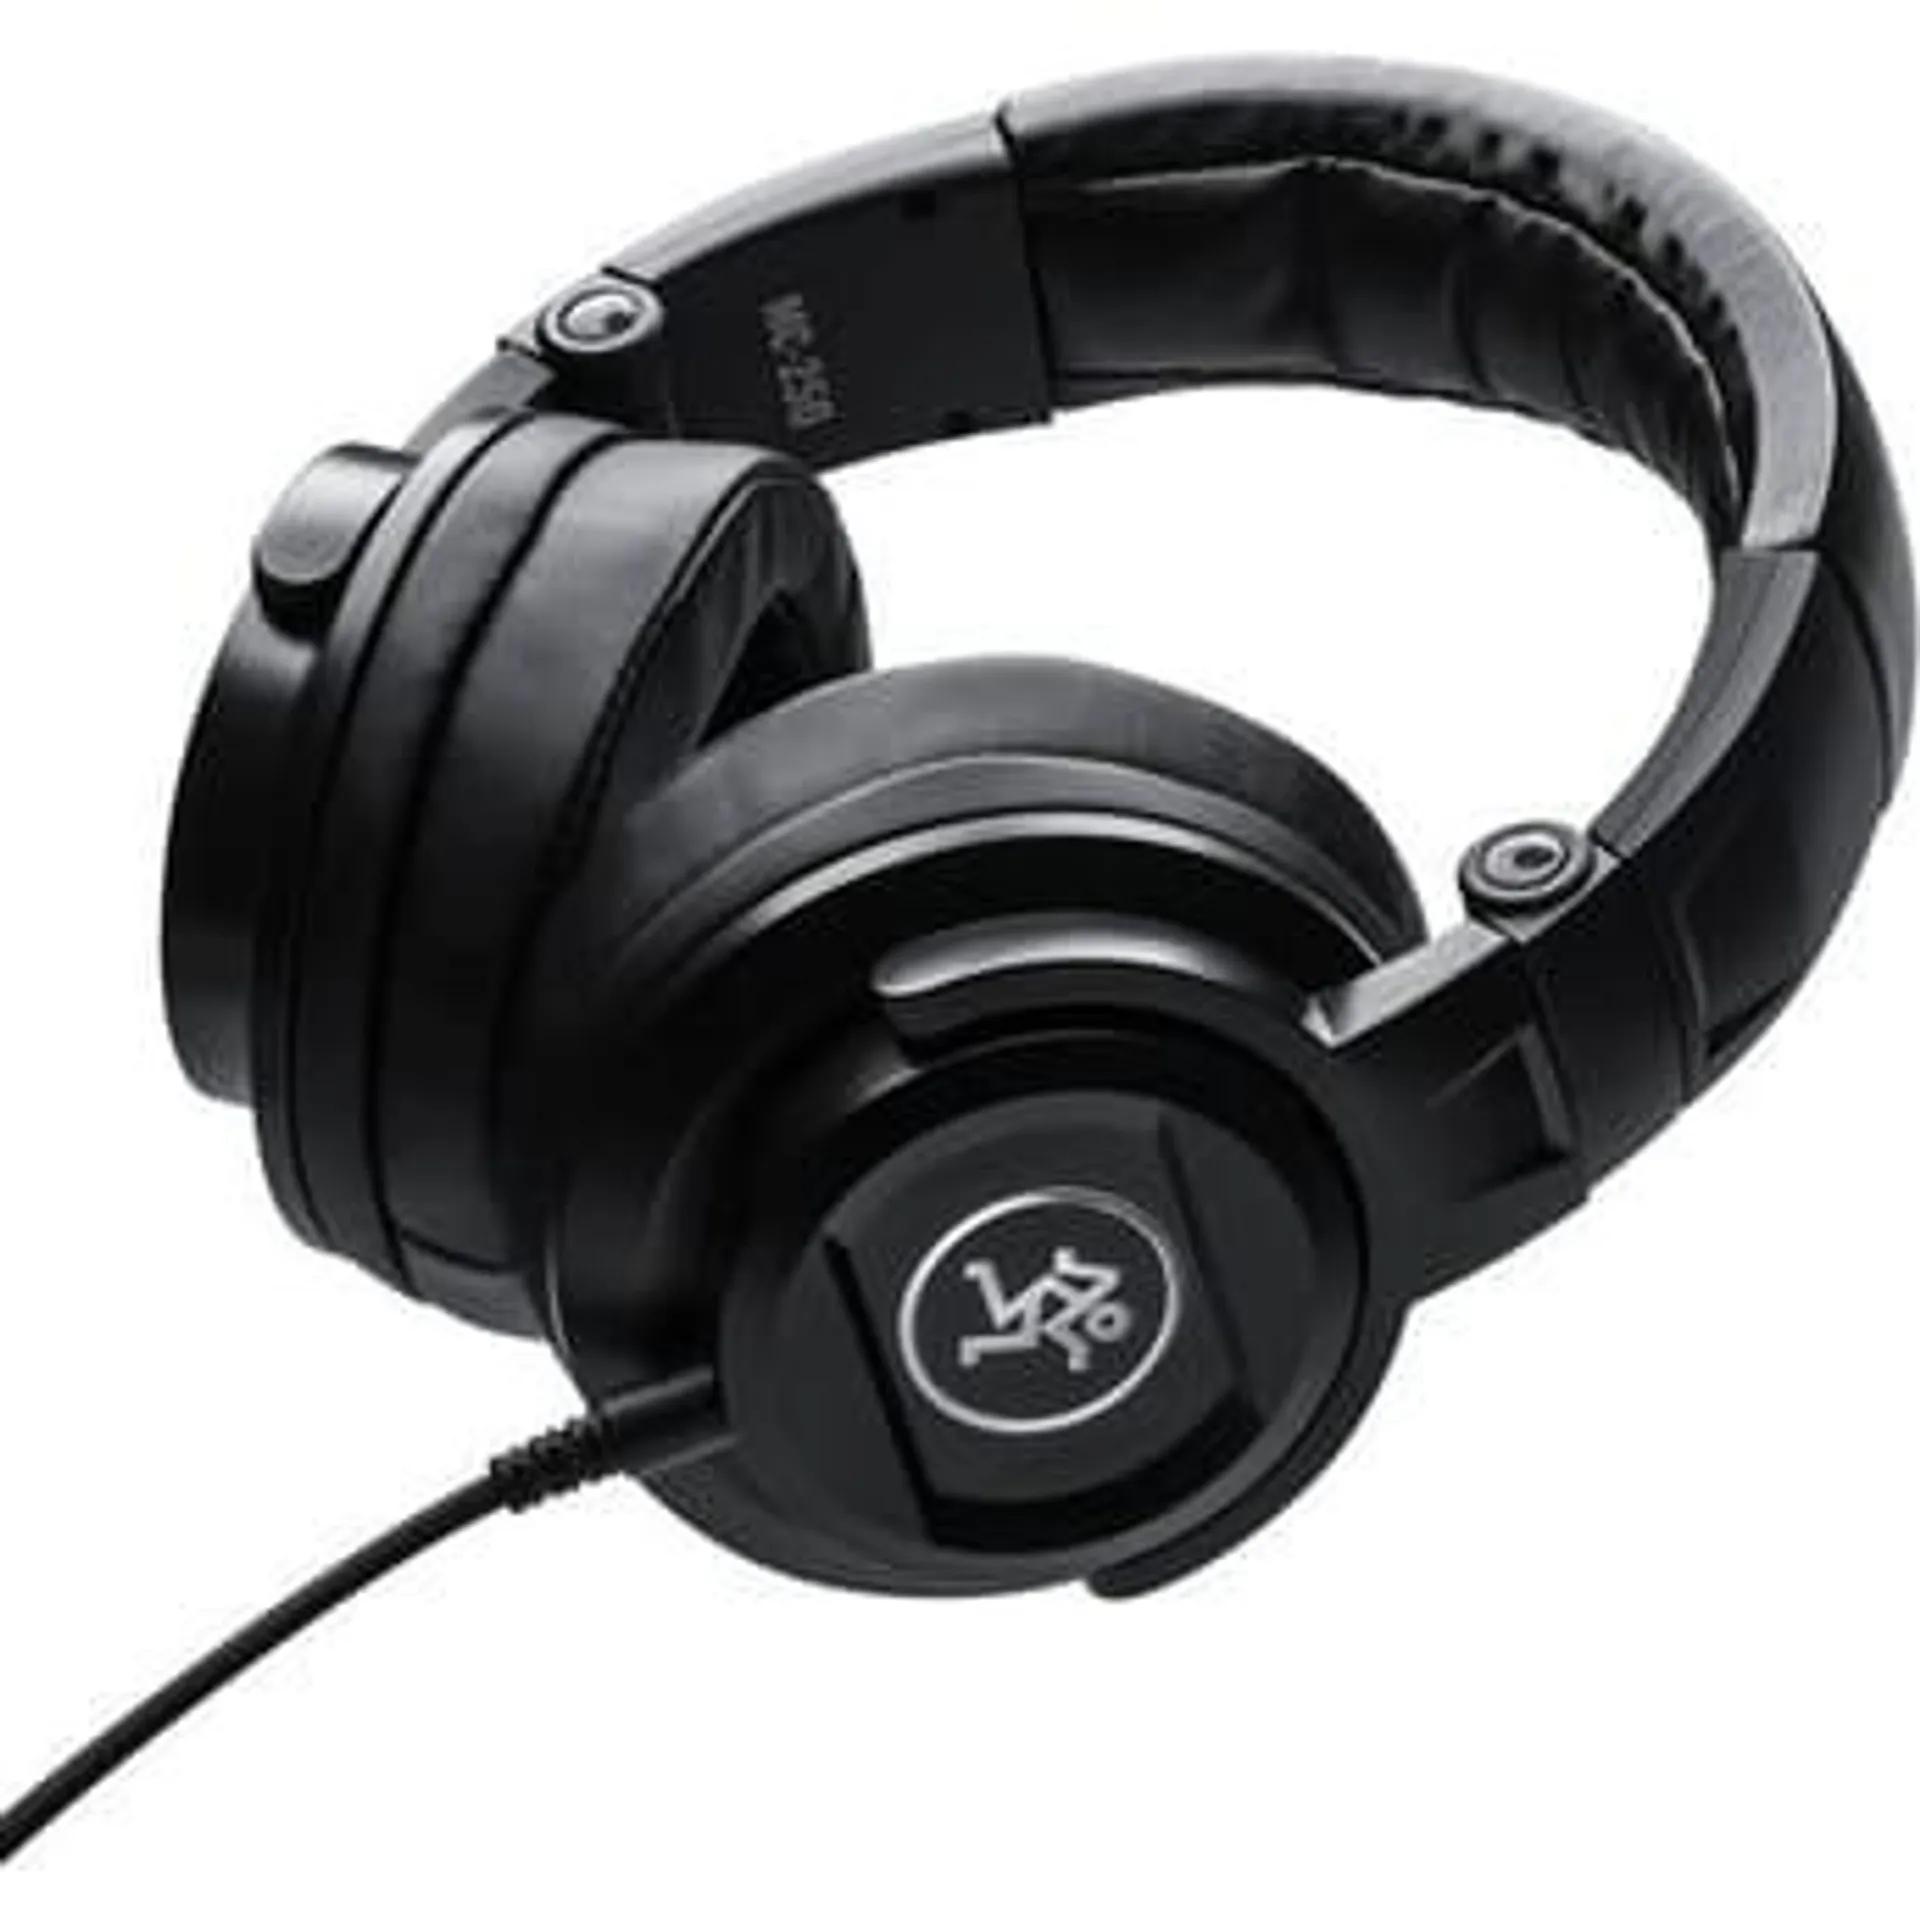 Mackie MC-250 Professional Closed-Back Over-Ear Headphones